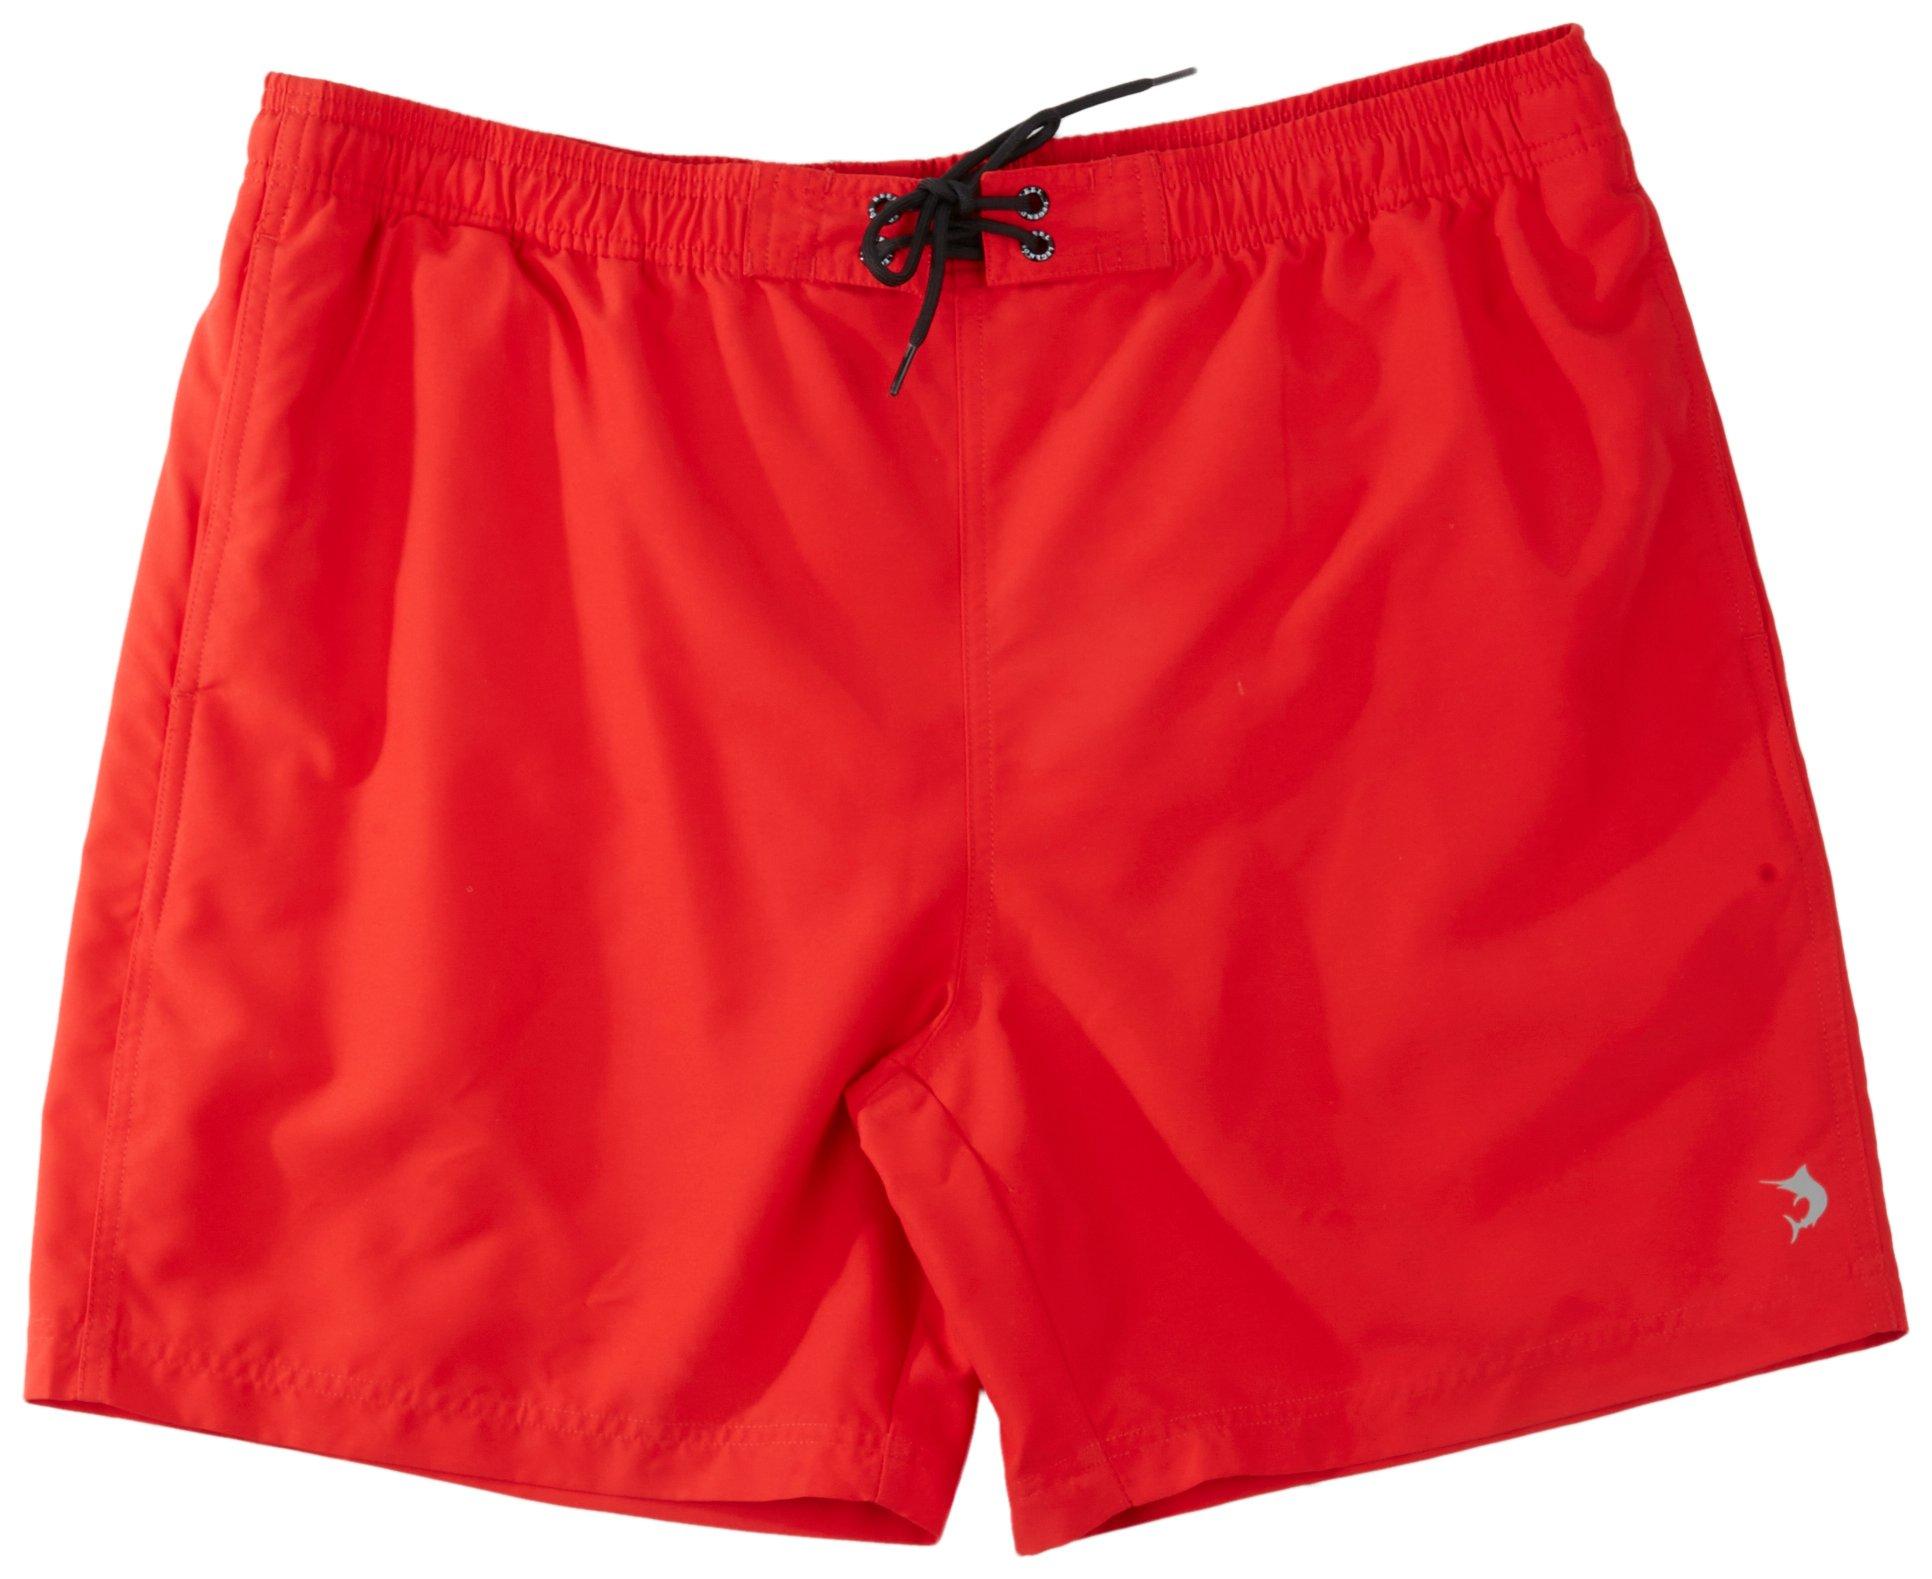 Jockey Men's Boxer Shorts- US22 (Red Check4) -  - Feel Free